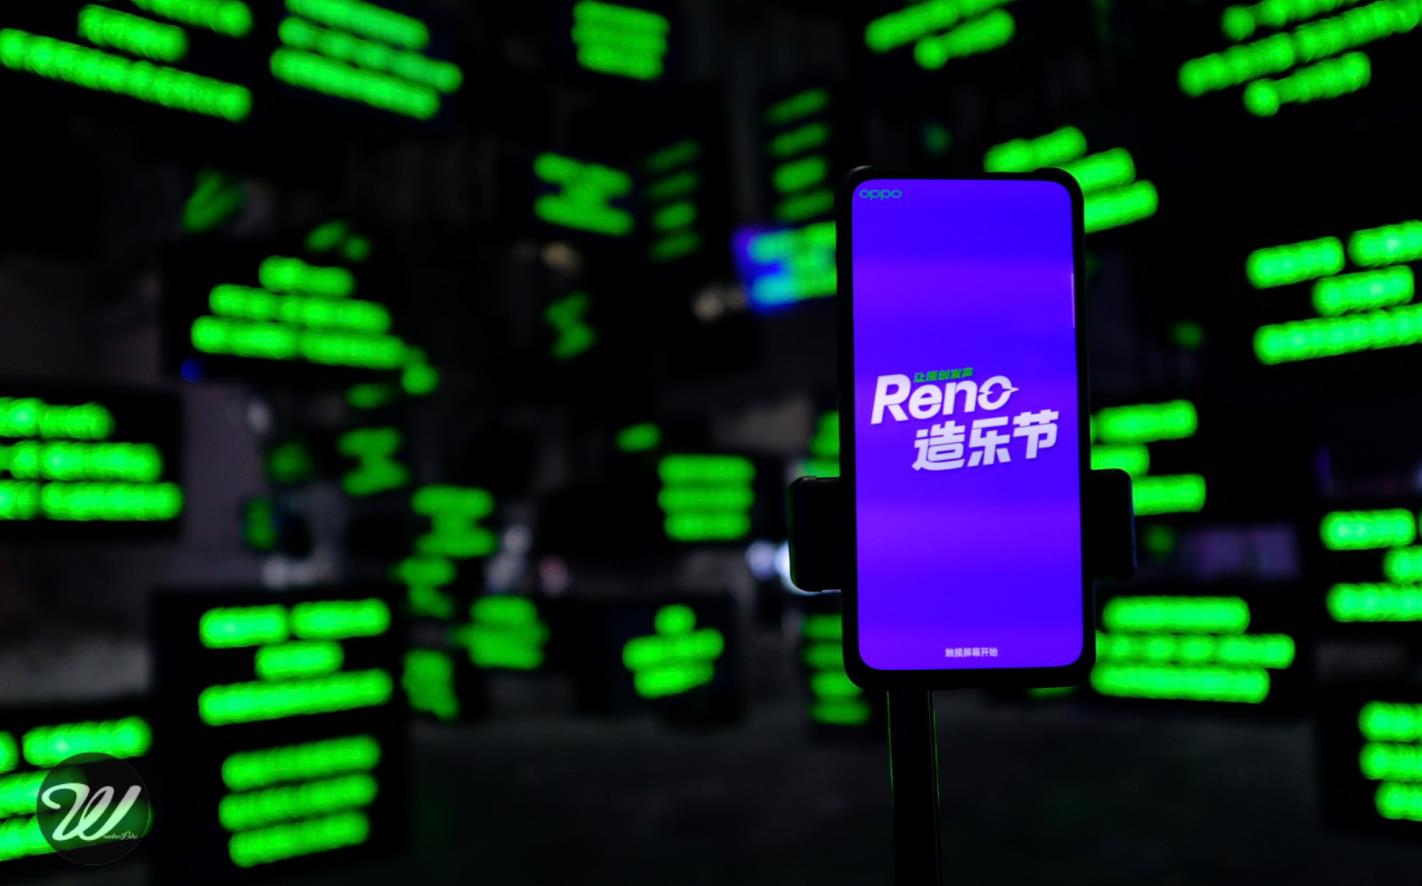 OPPO RENO 浙江卫视2019造乐节互动装置